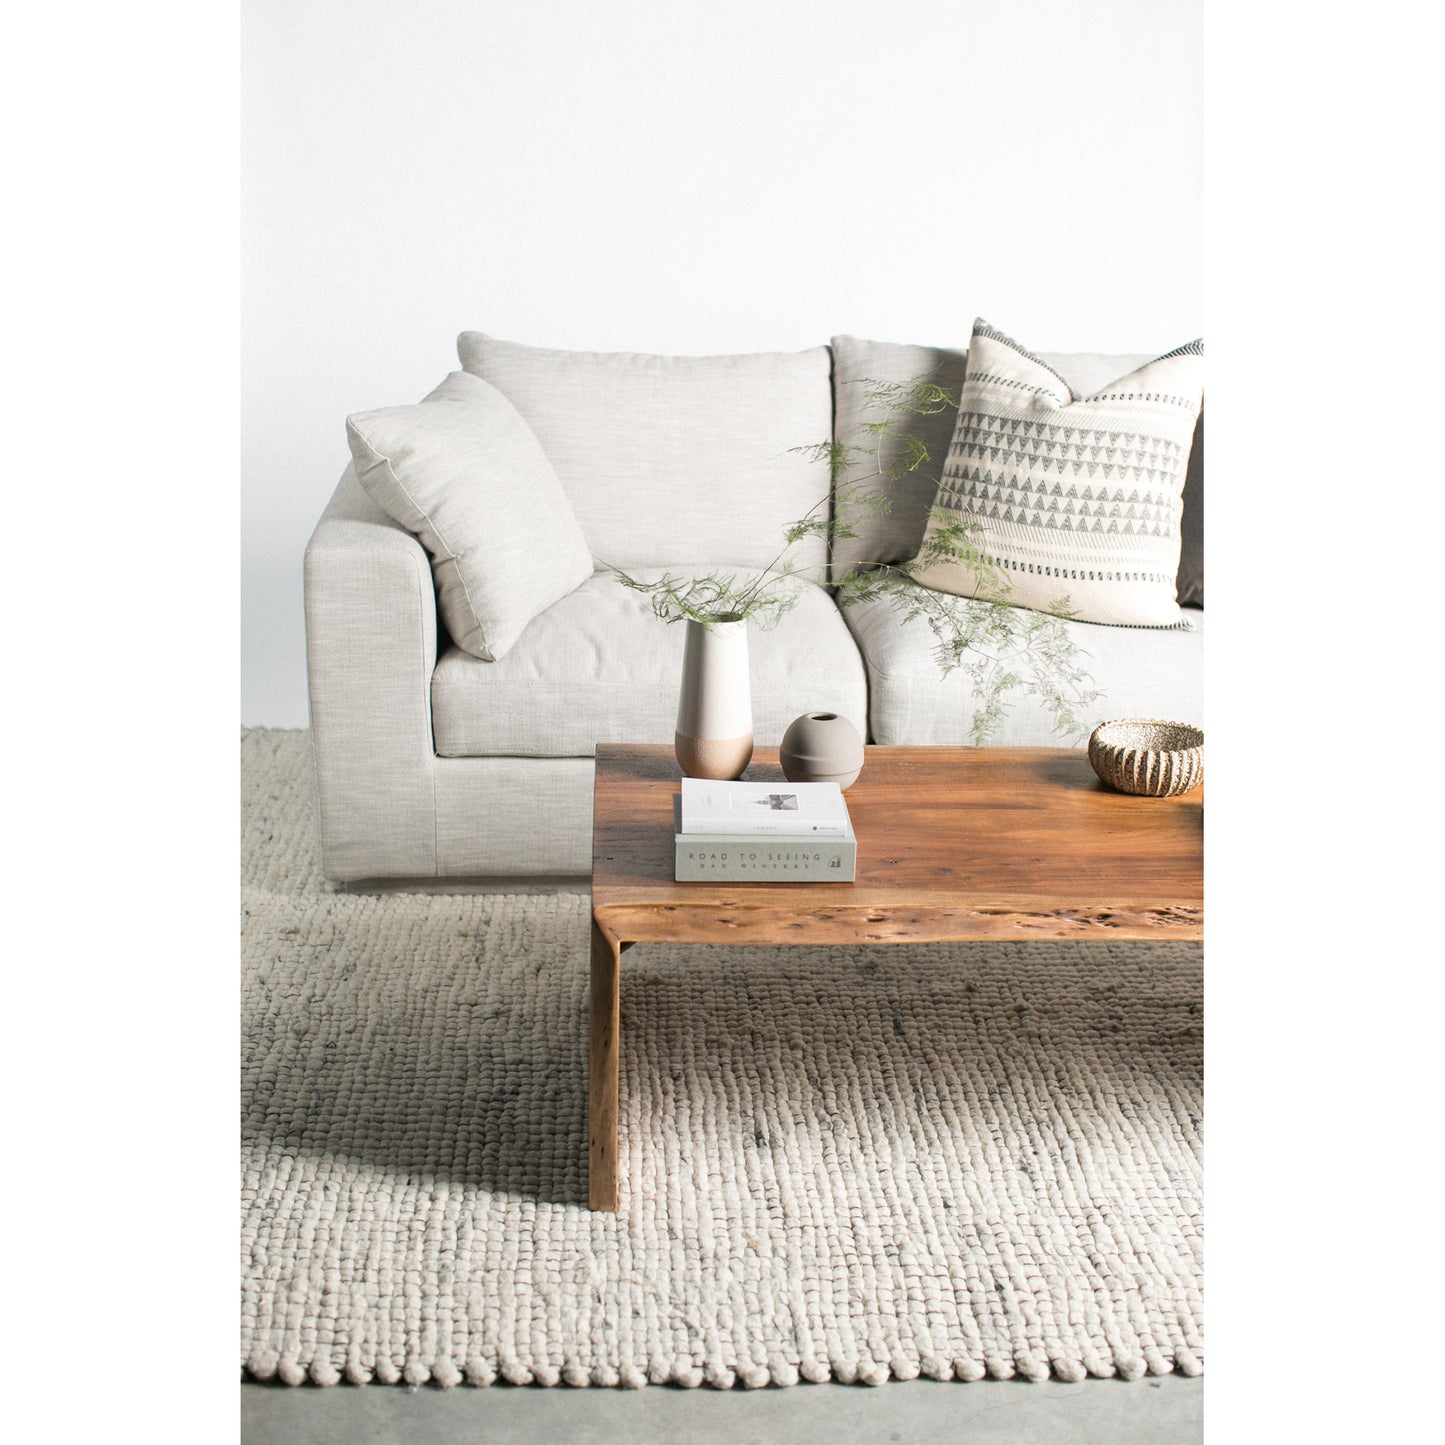 Moes Home Slipper Chairs Justin Grey Scandinavian Furniture